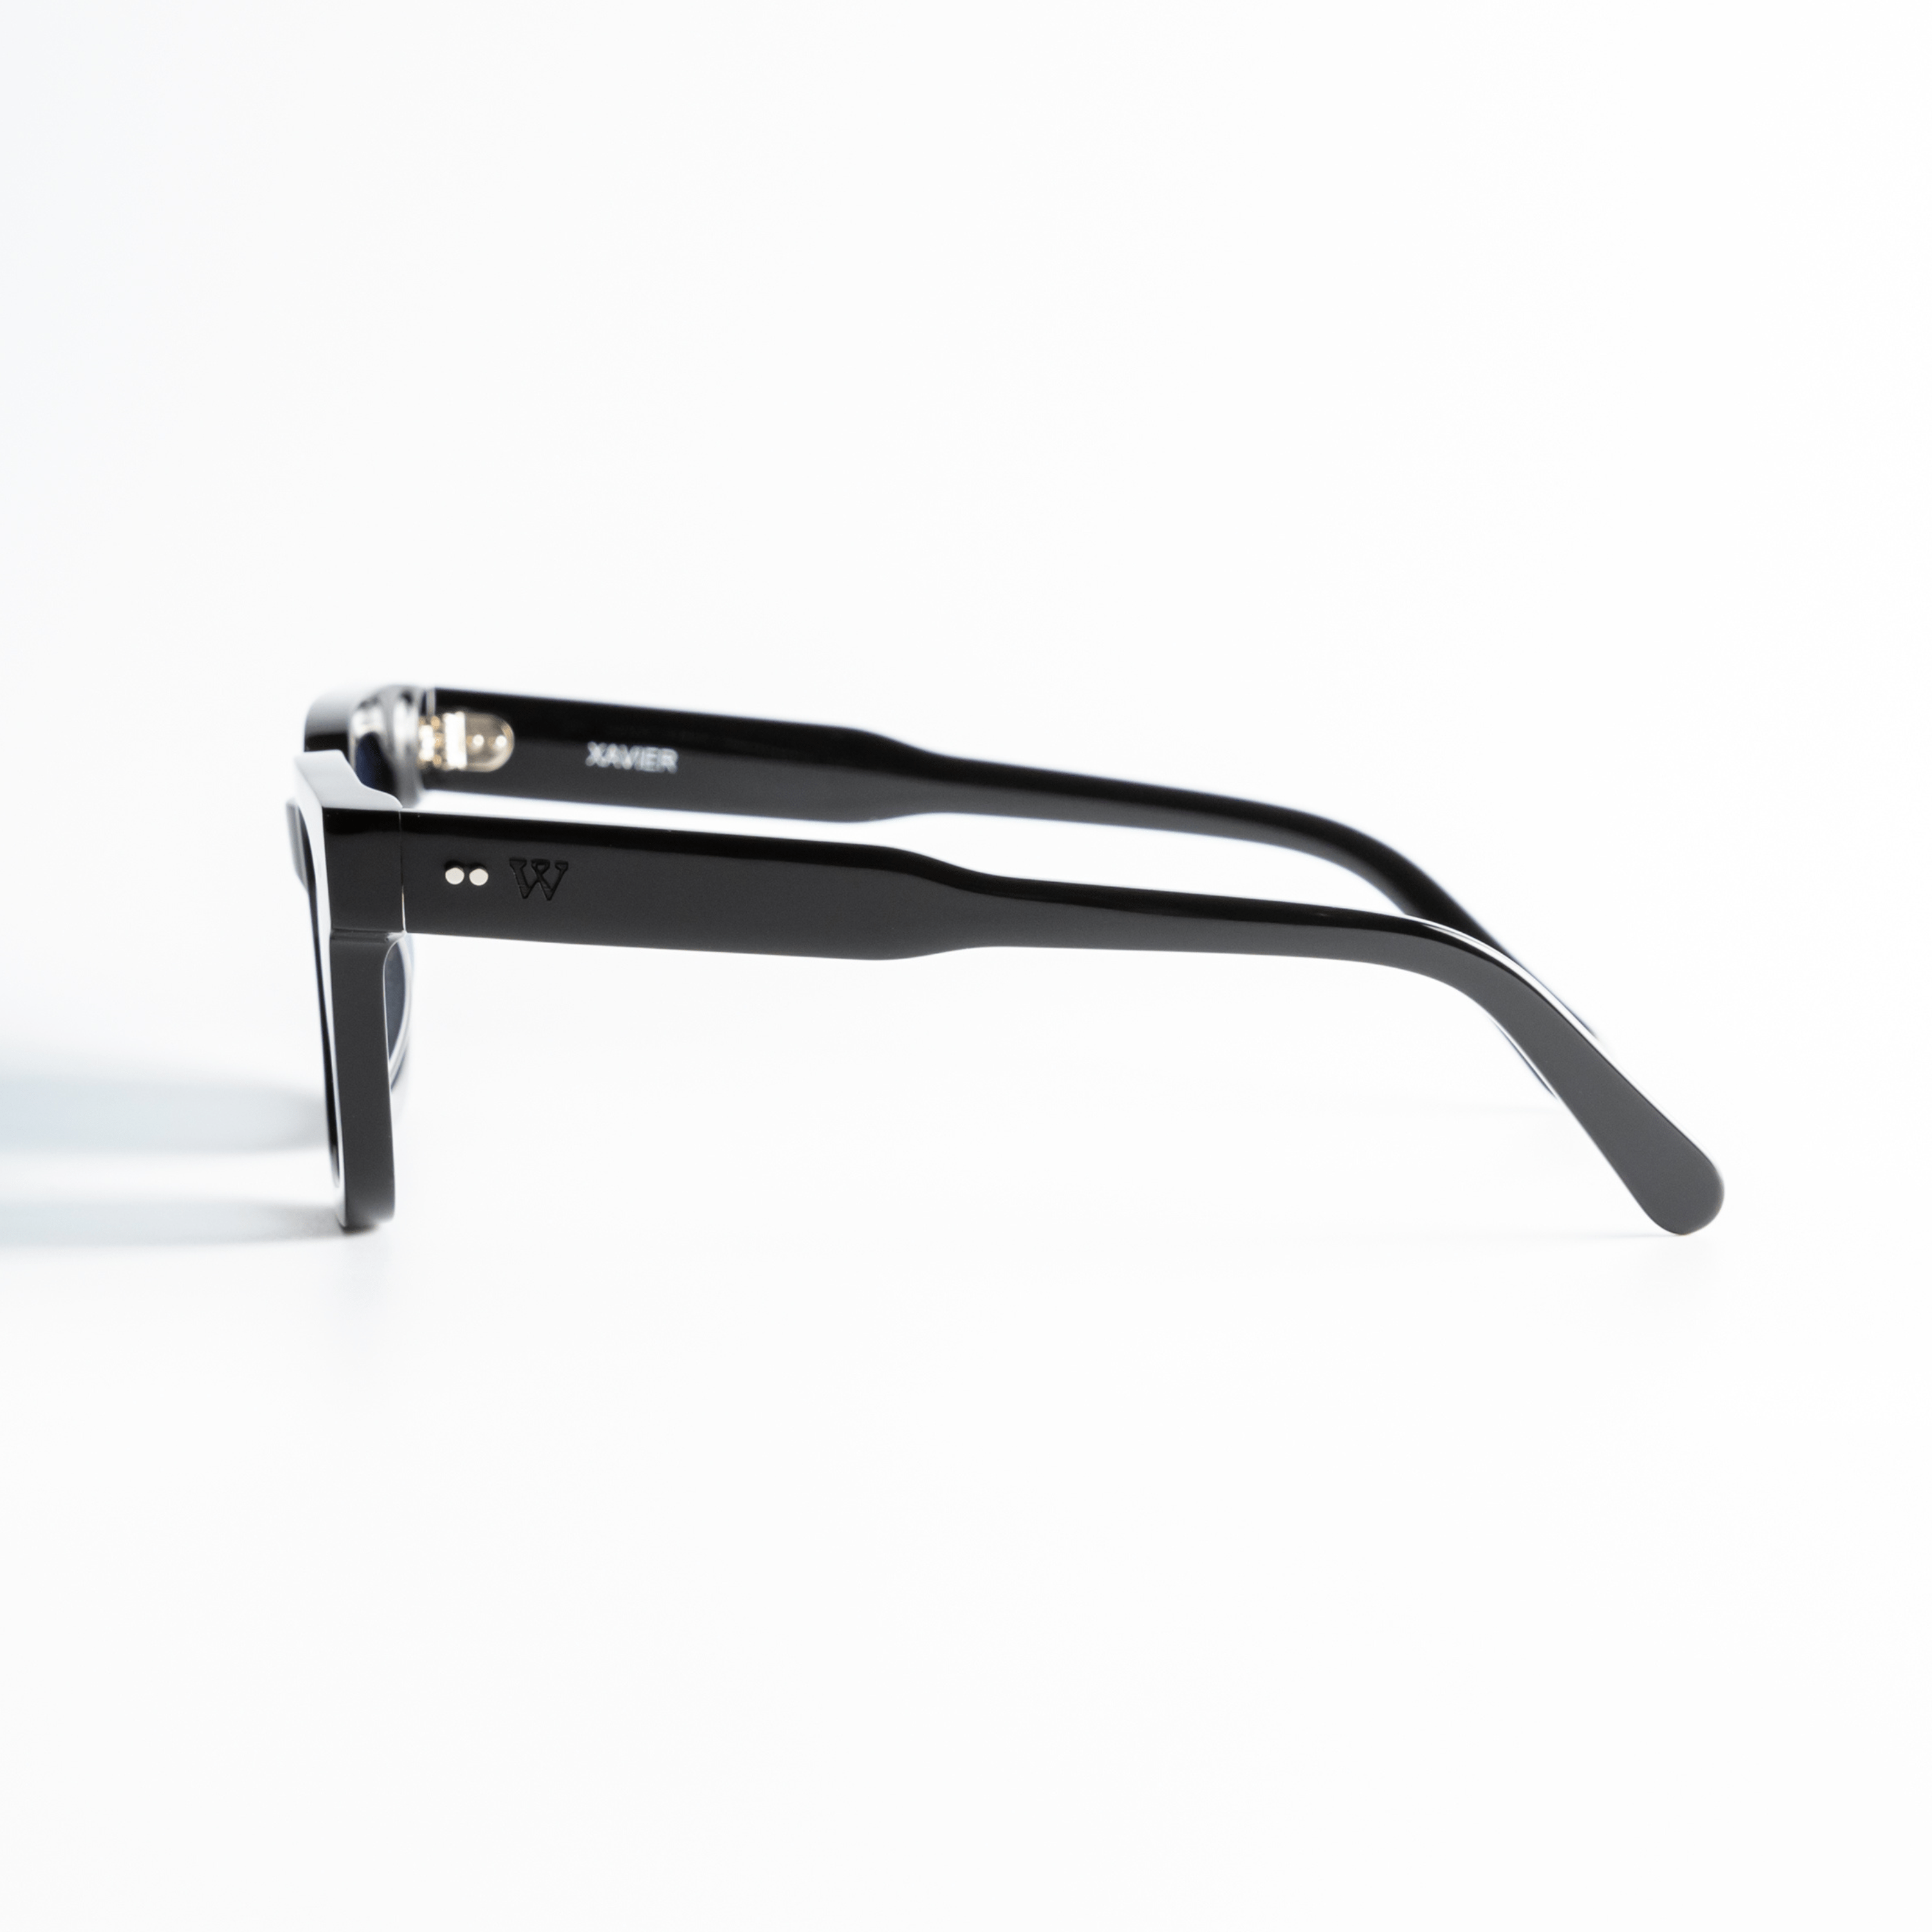 Walter Hill Sunglasses Black / Standard / Polarized Cat.3 XAVIER - Black - Sapphire